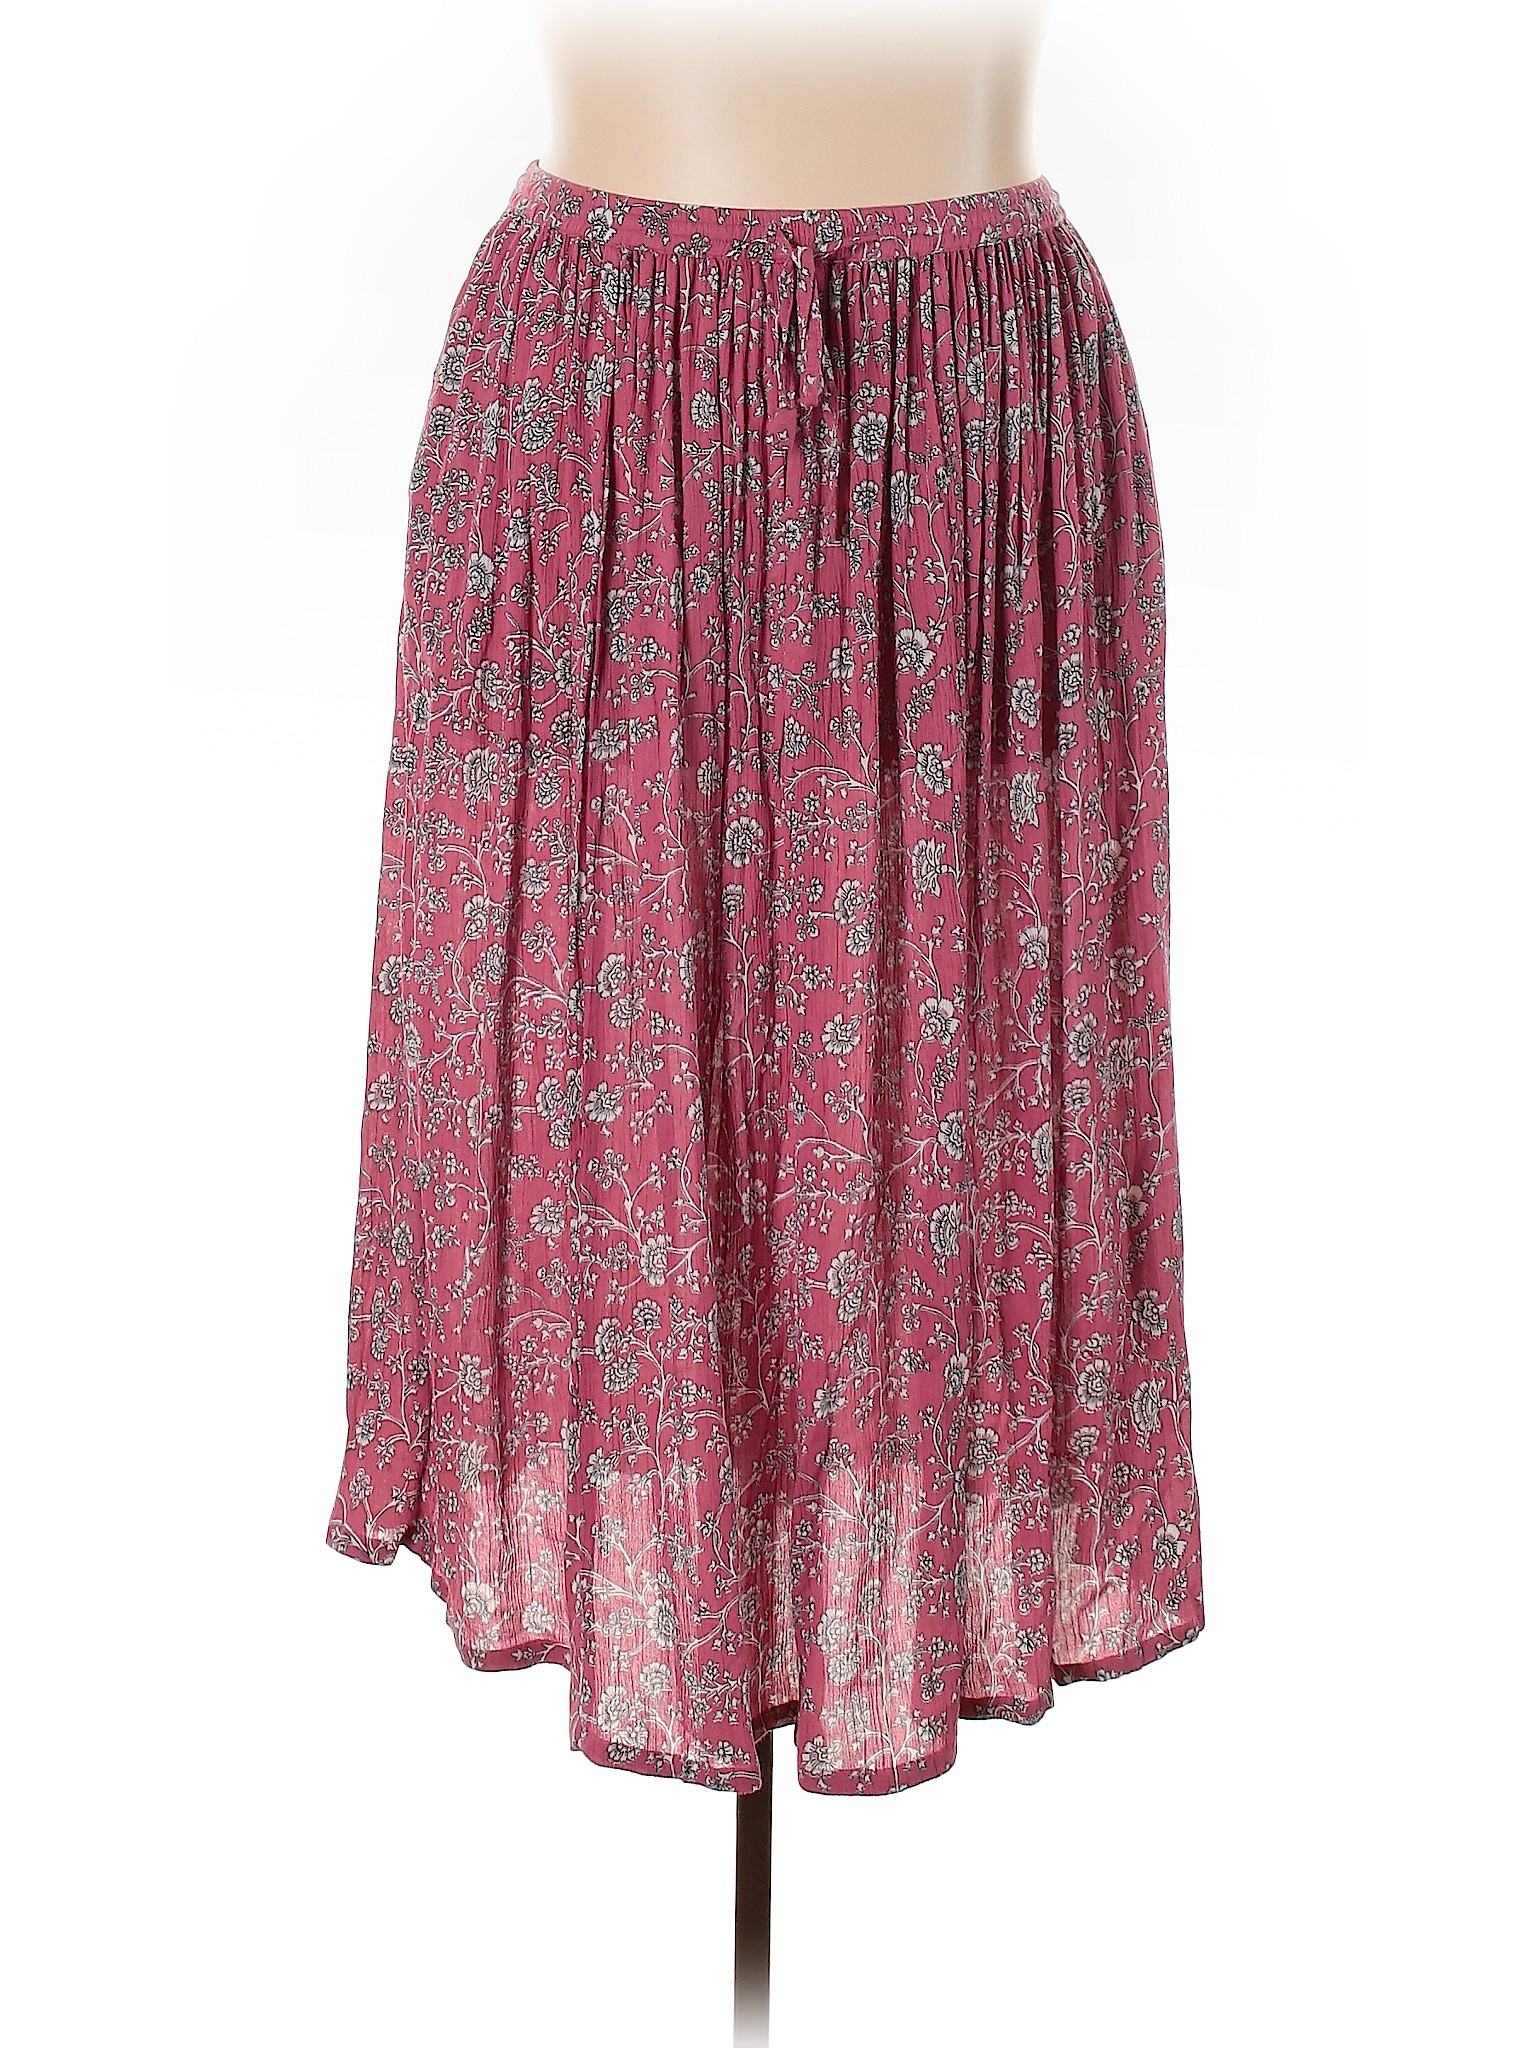 Orvis Women Pink Casual Skirt XL | eBay